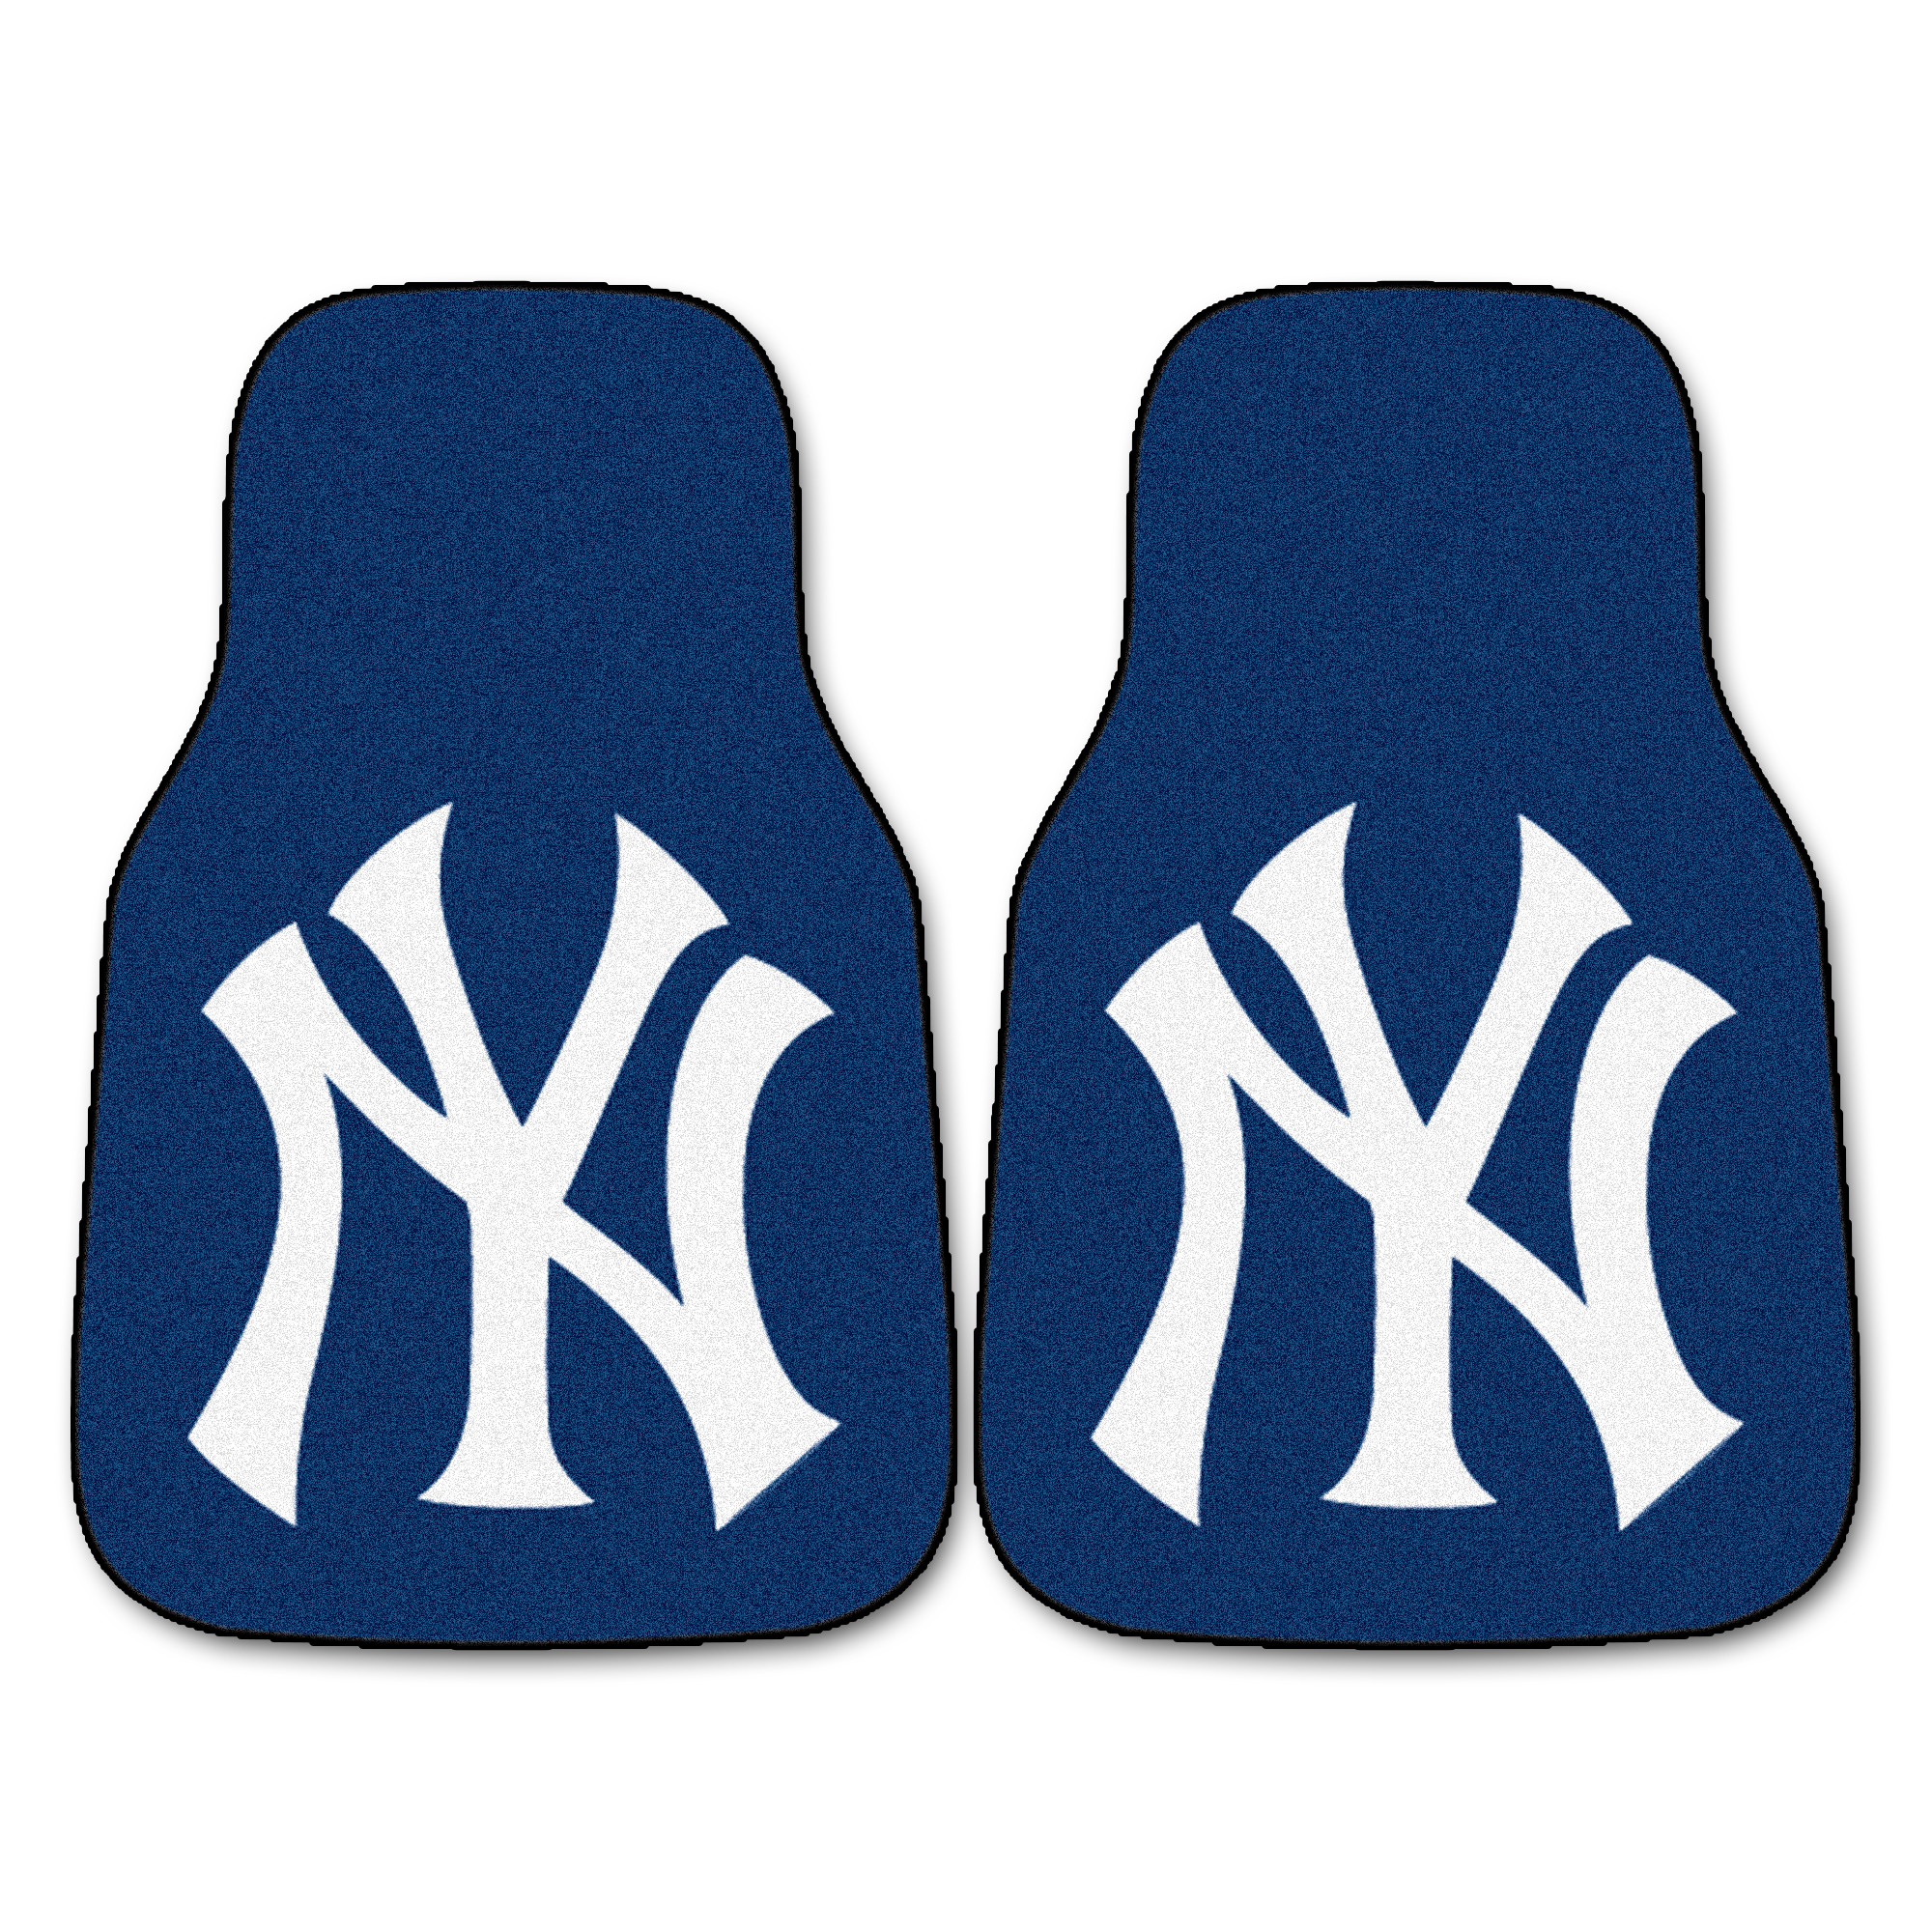 Major League Baseball New York Yankees 2-piece Carpeted Car Mats 18" x 27"